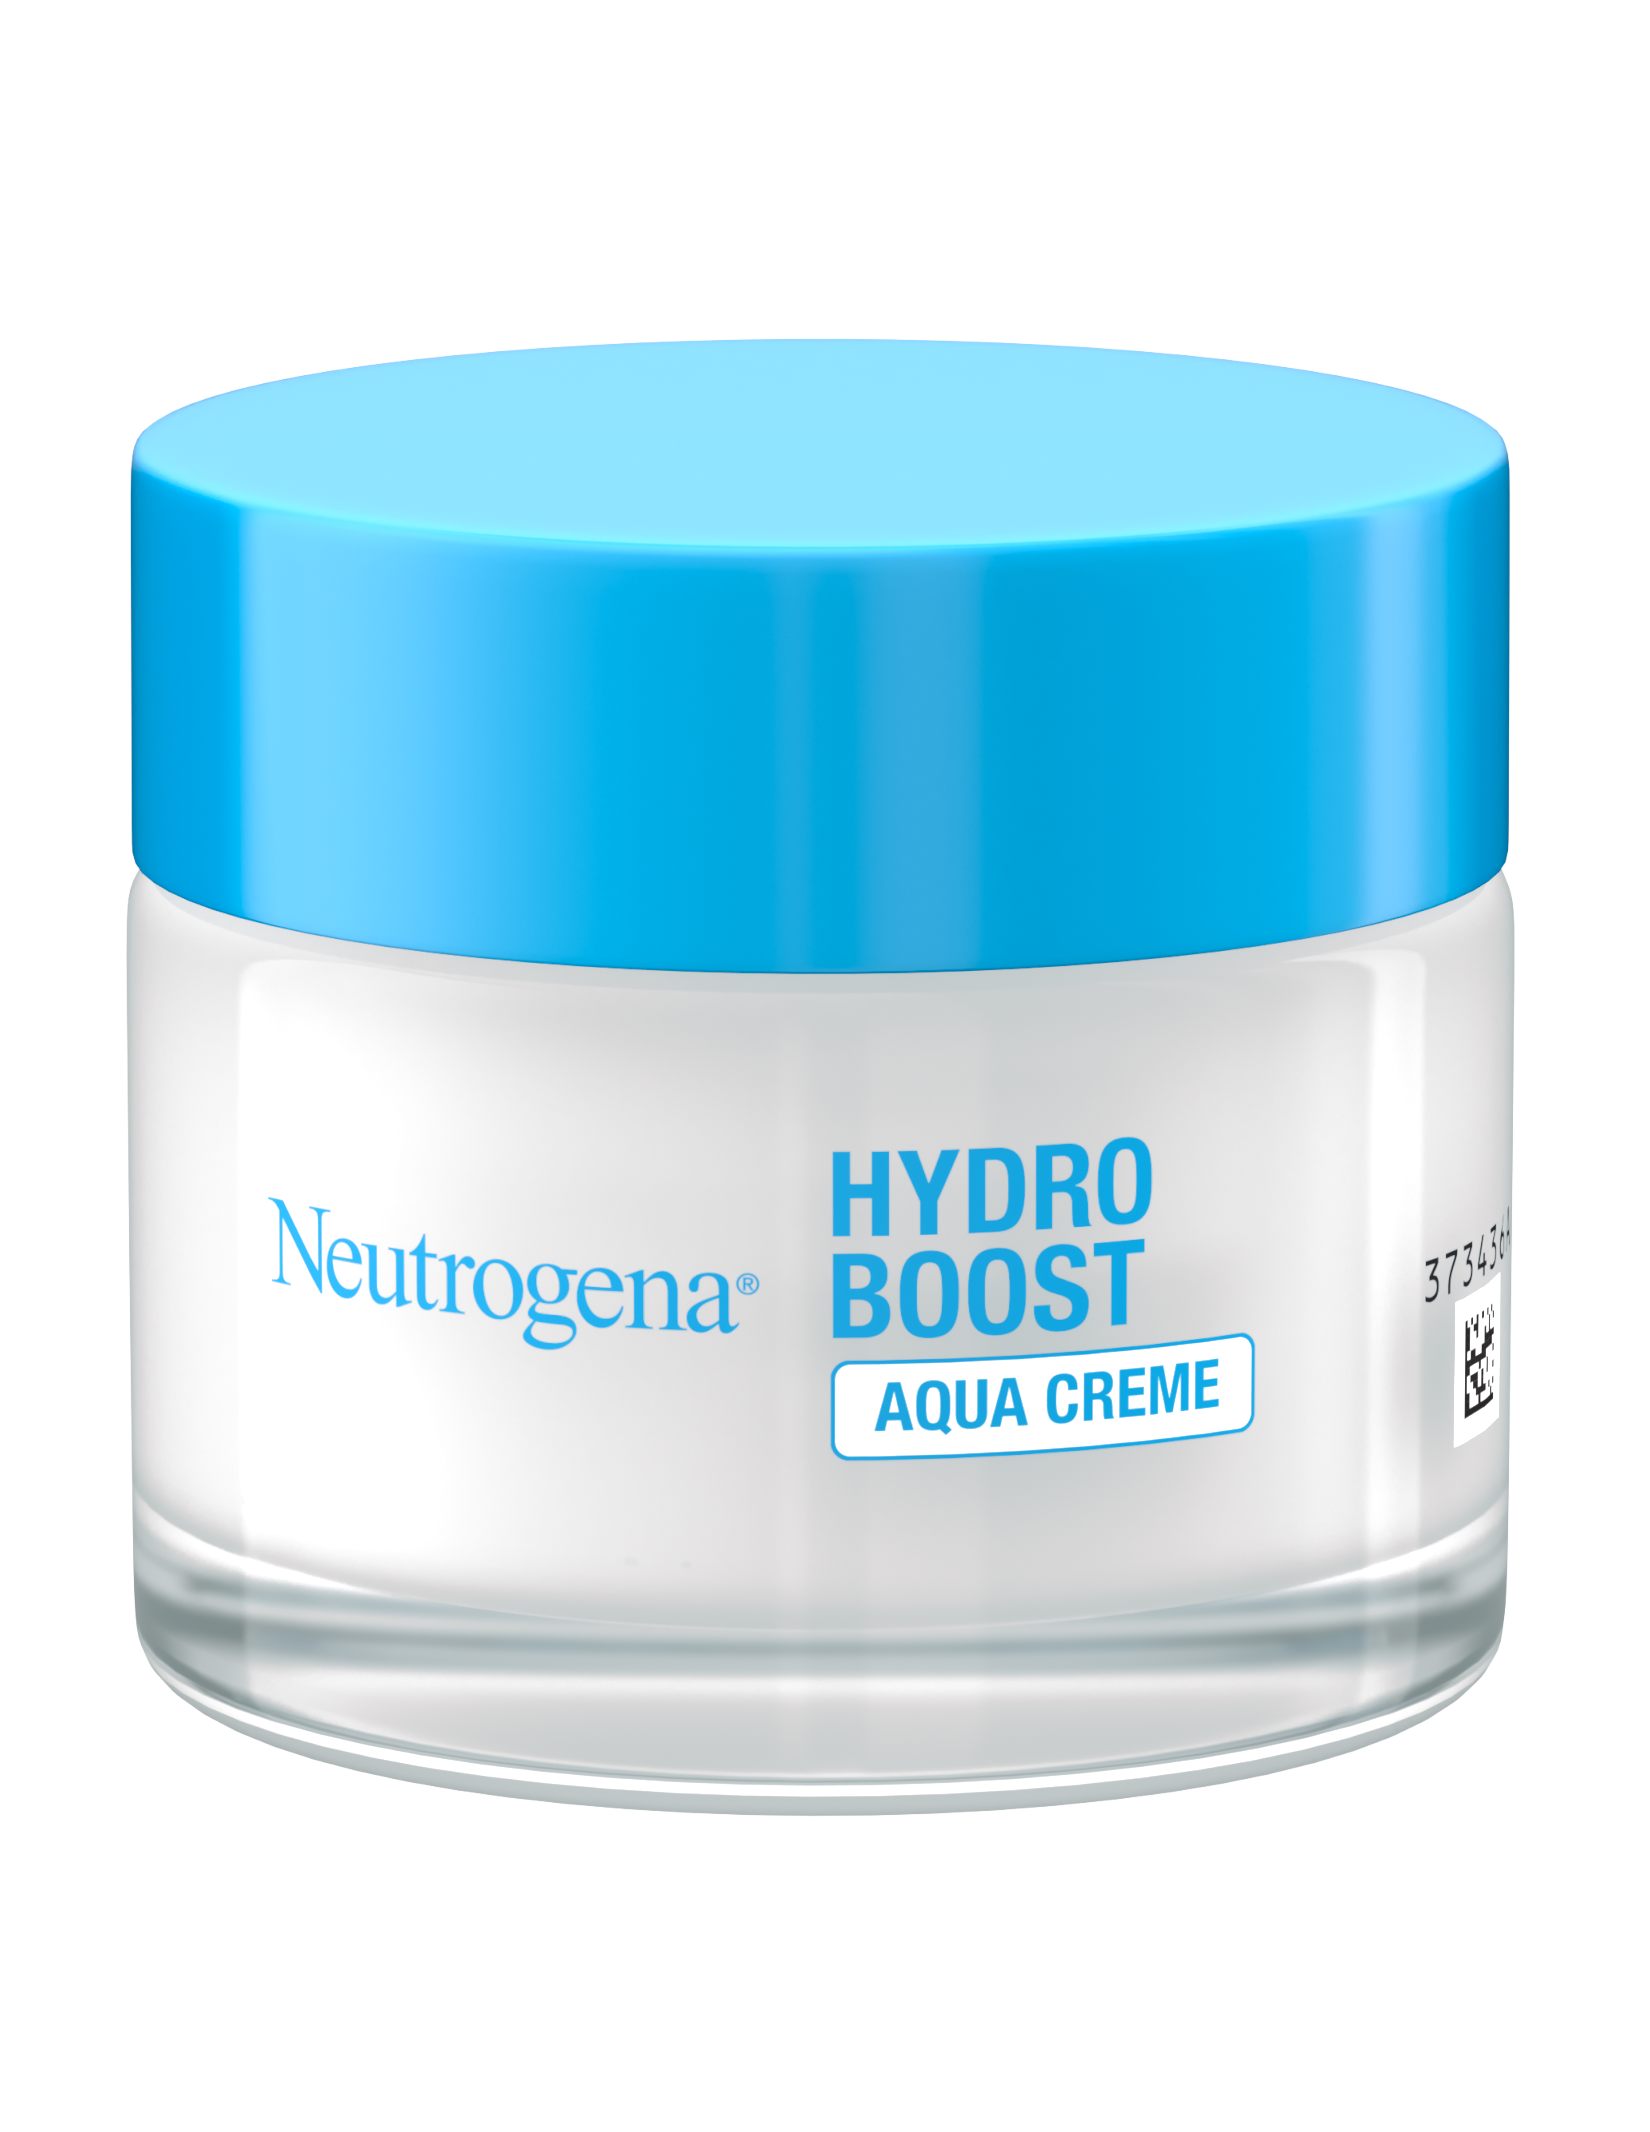 Neutrogena® Hydro Boost Aqua Creme